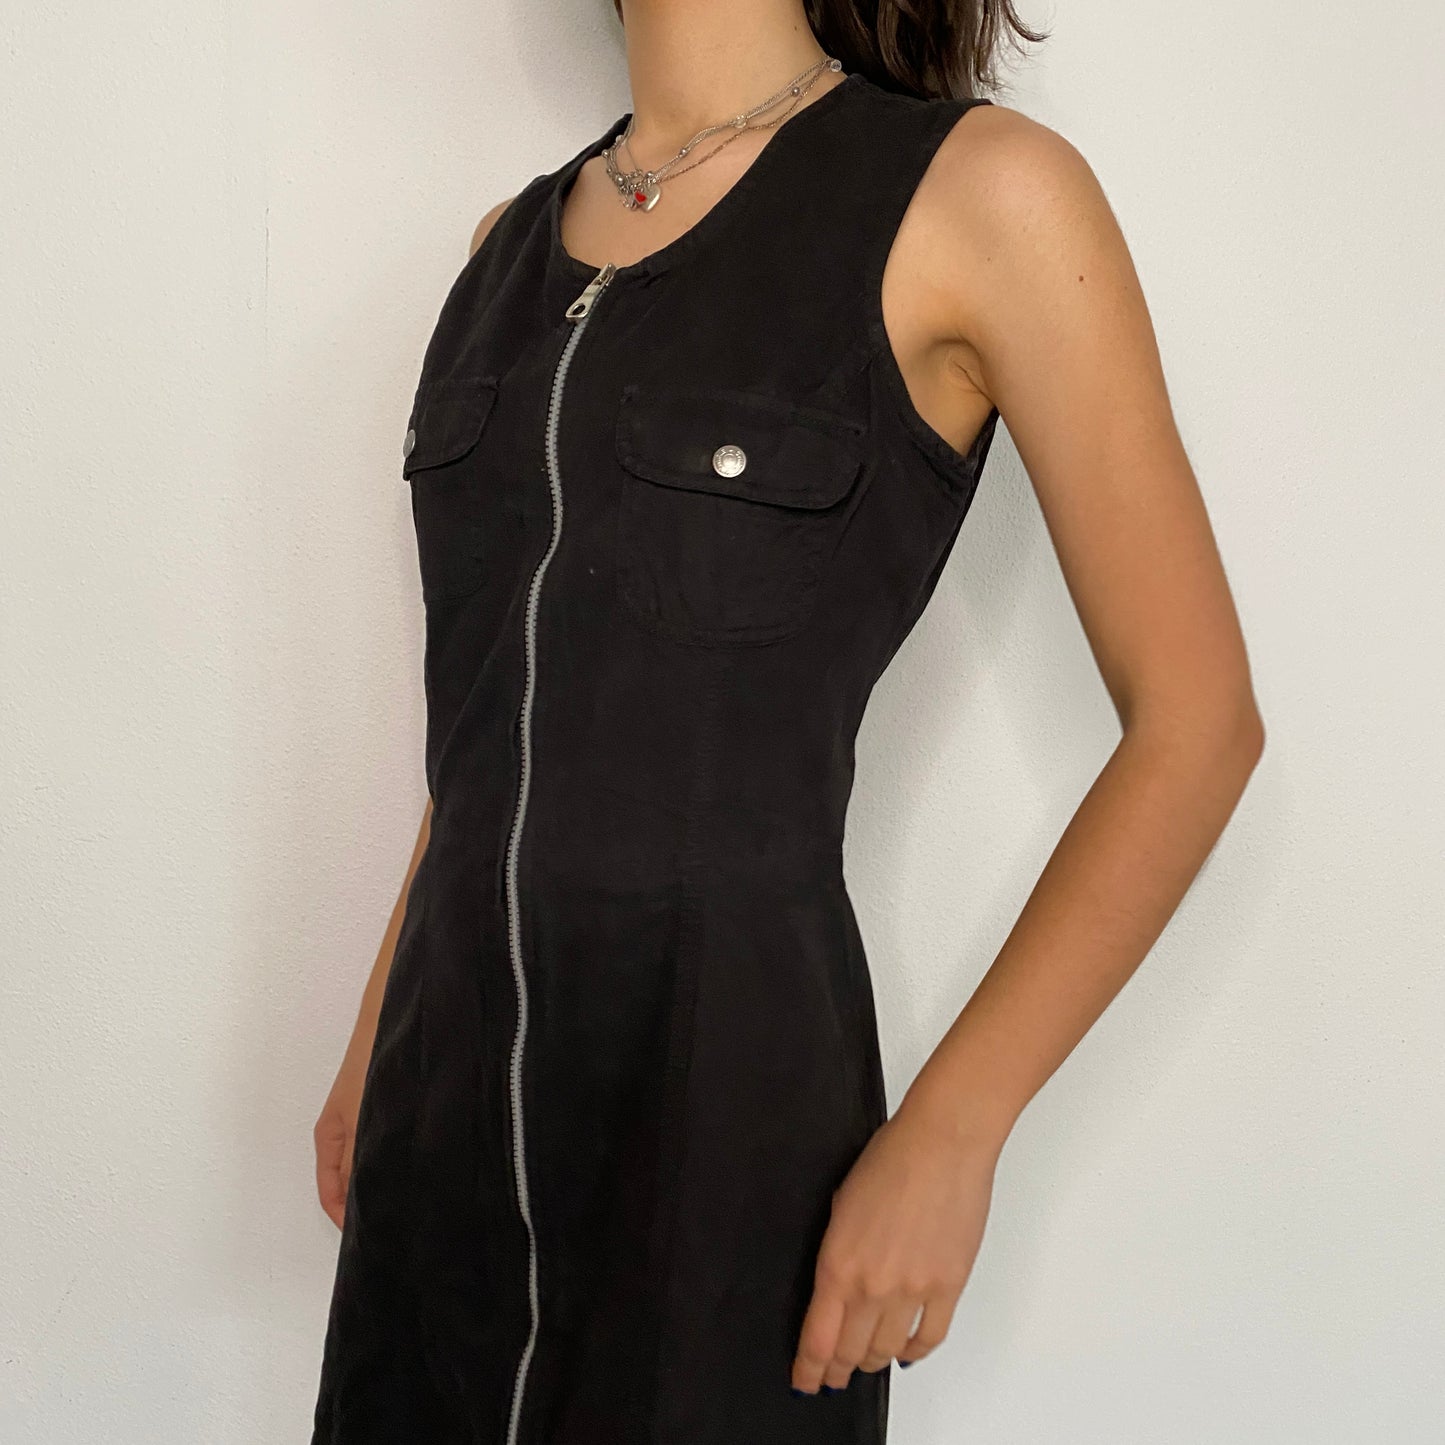 90s Style Black Dress with Zipper